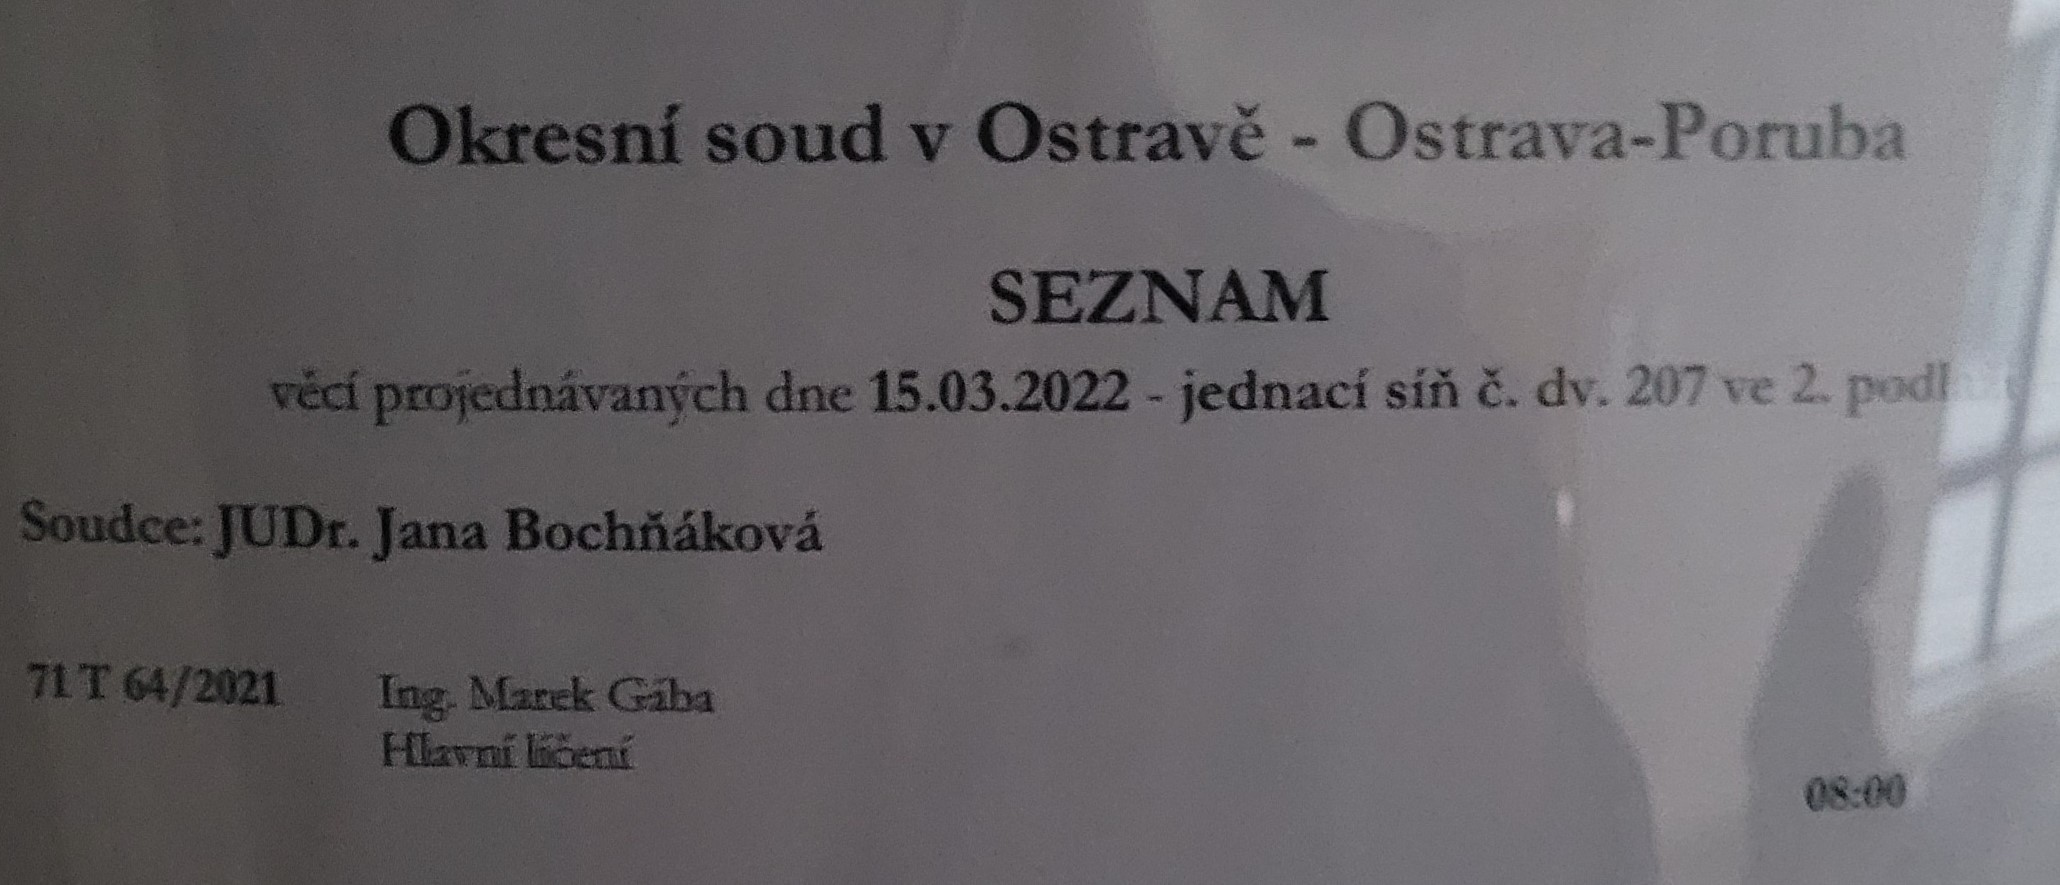 OS Ostrava prg 15.3.2022